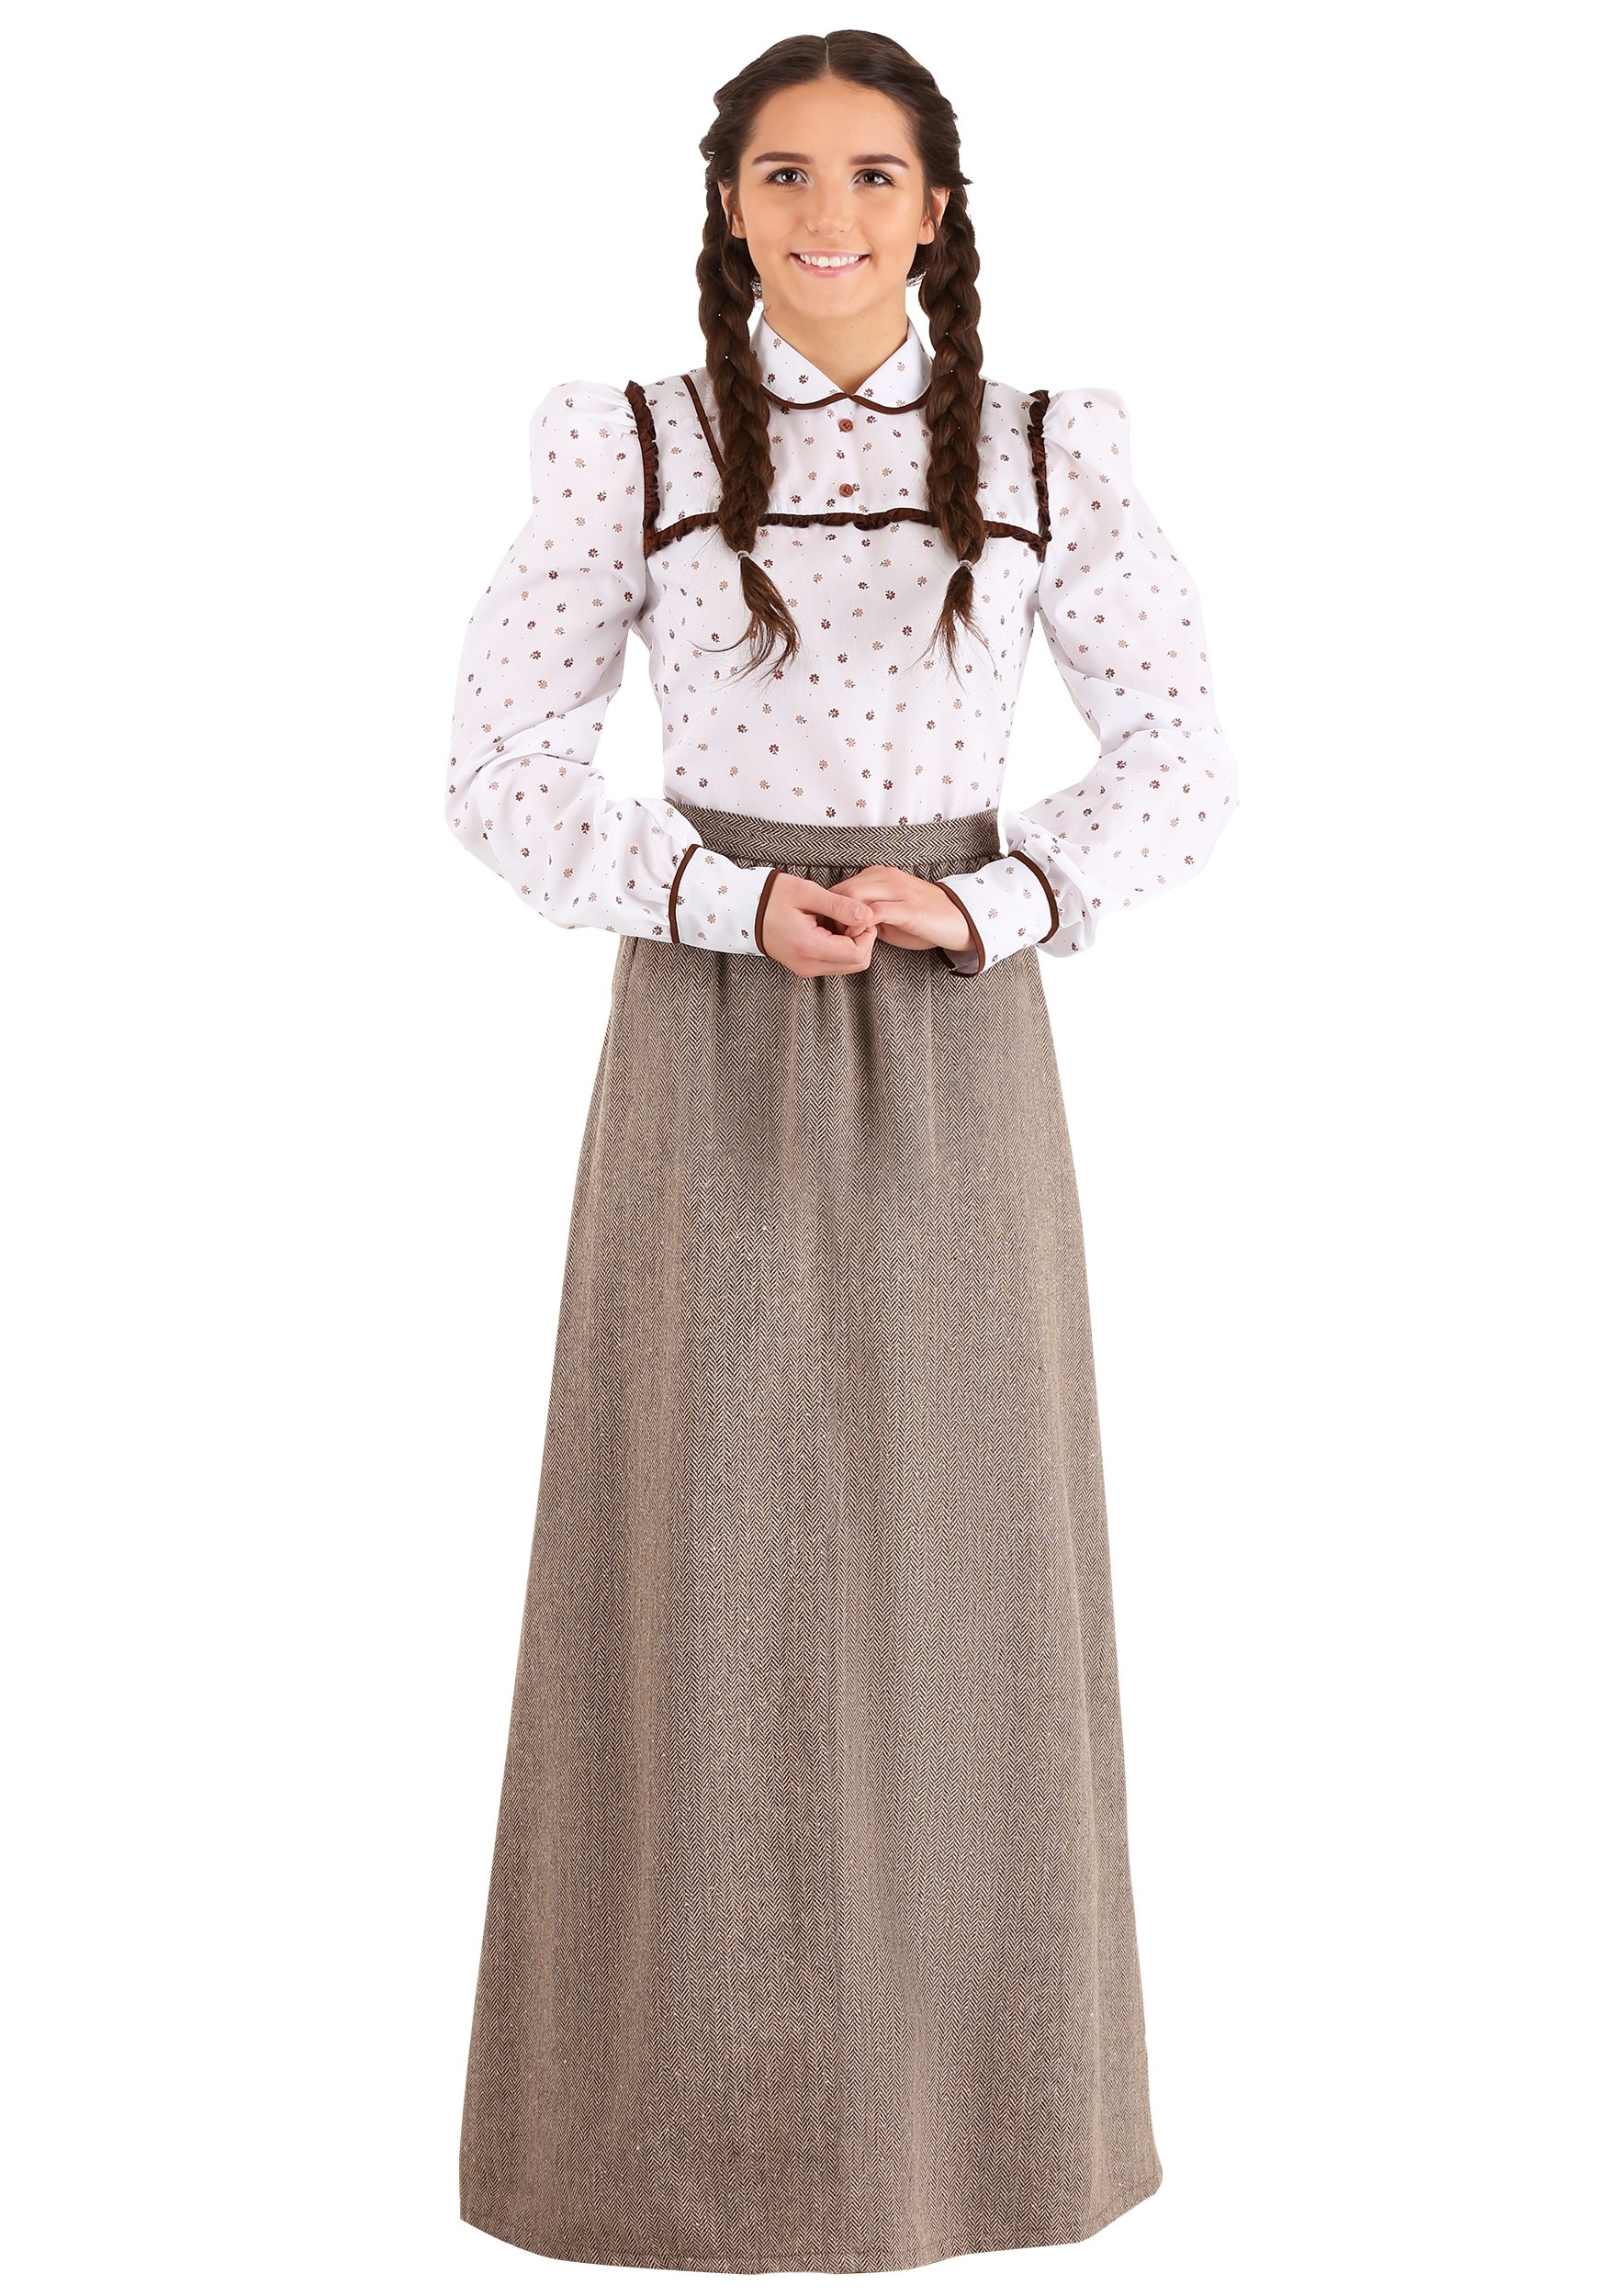 Westward Pioneer Costume for Women